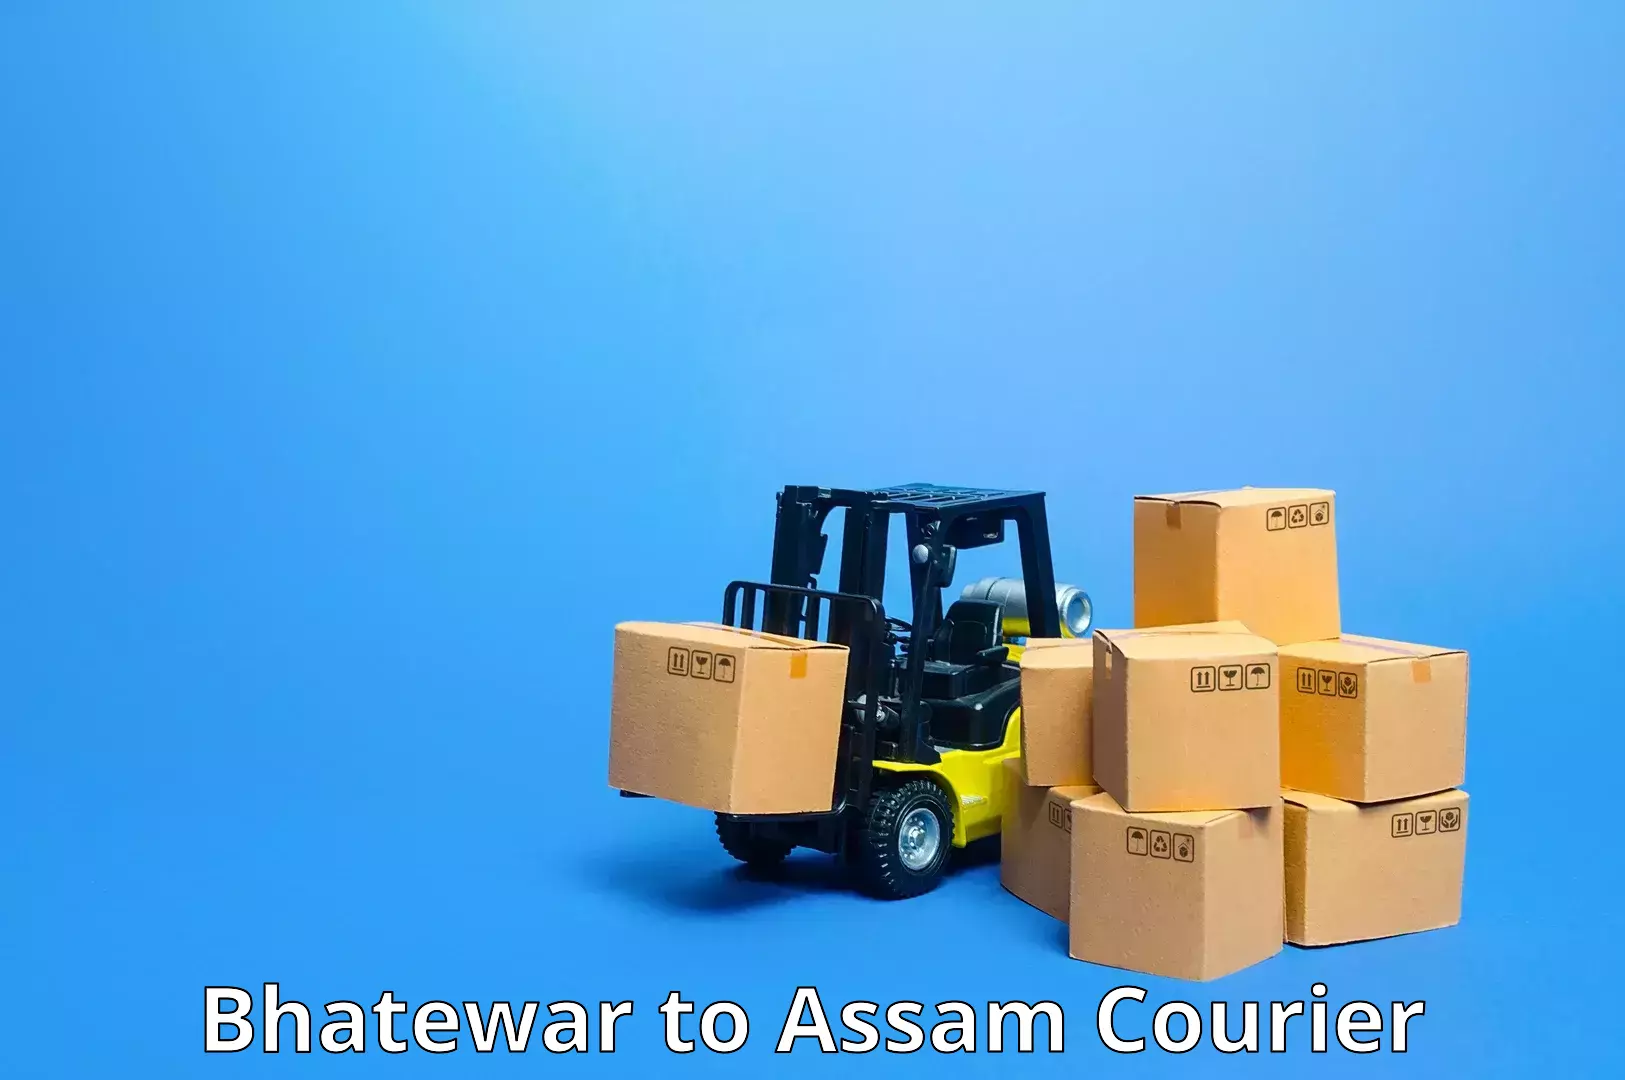 Courier service innovation Bhatewar to Assam